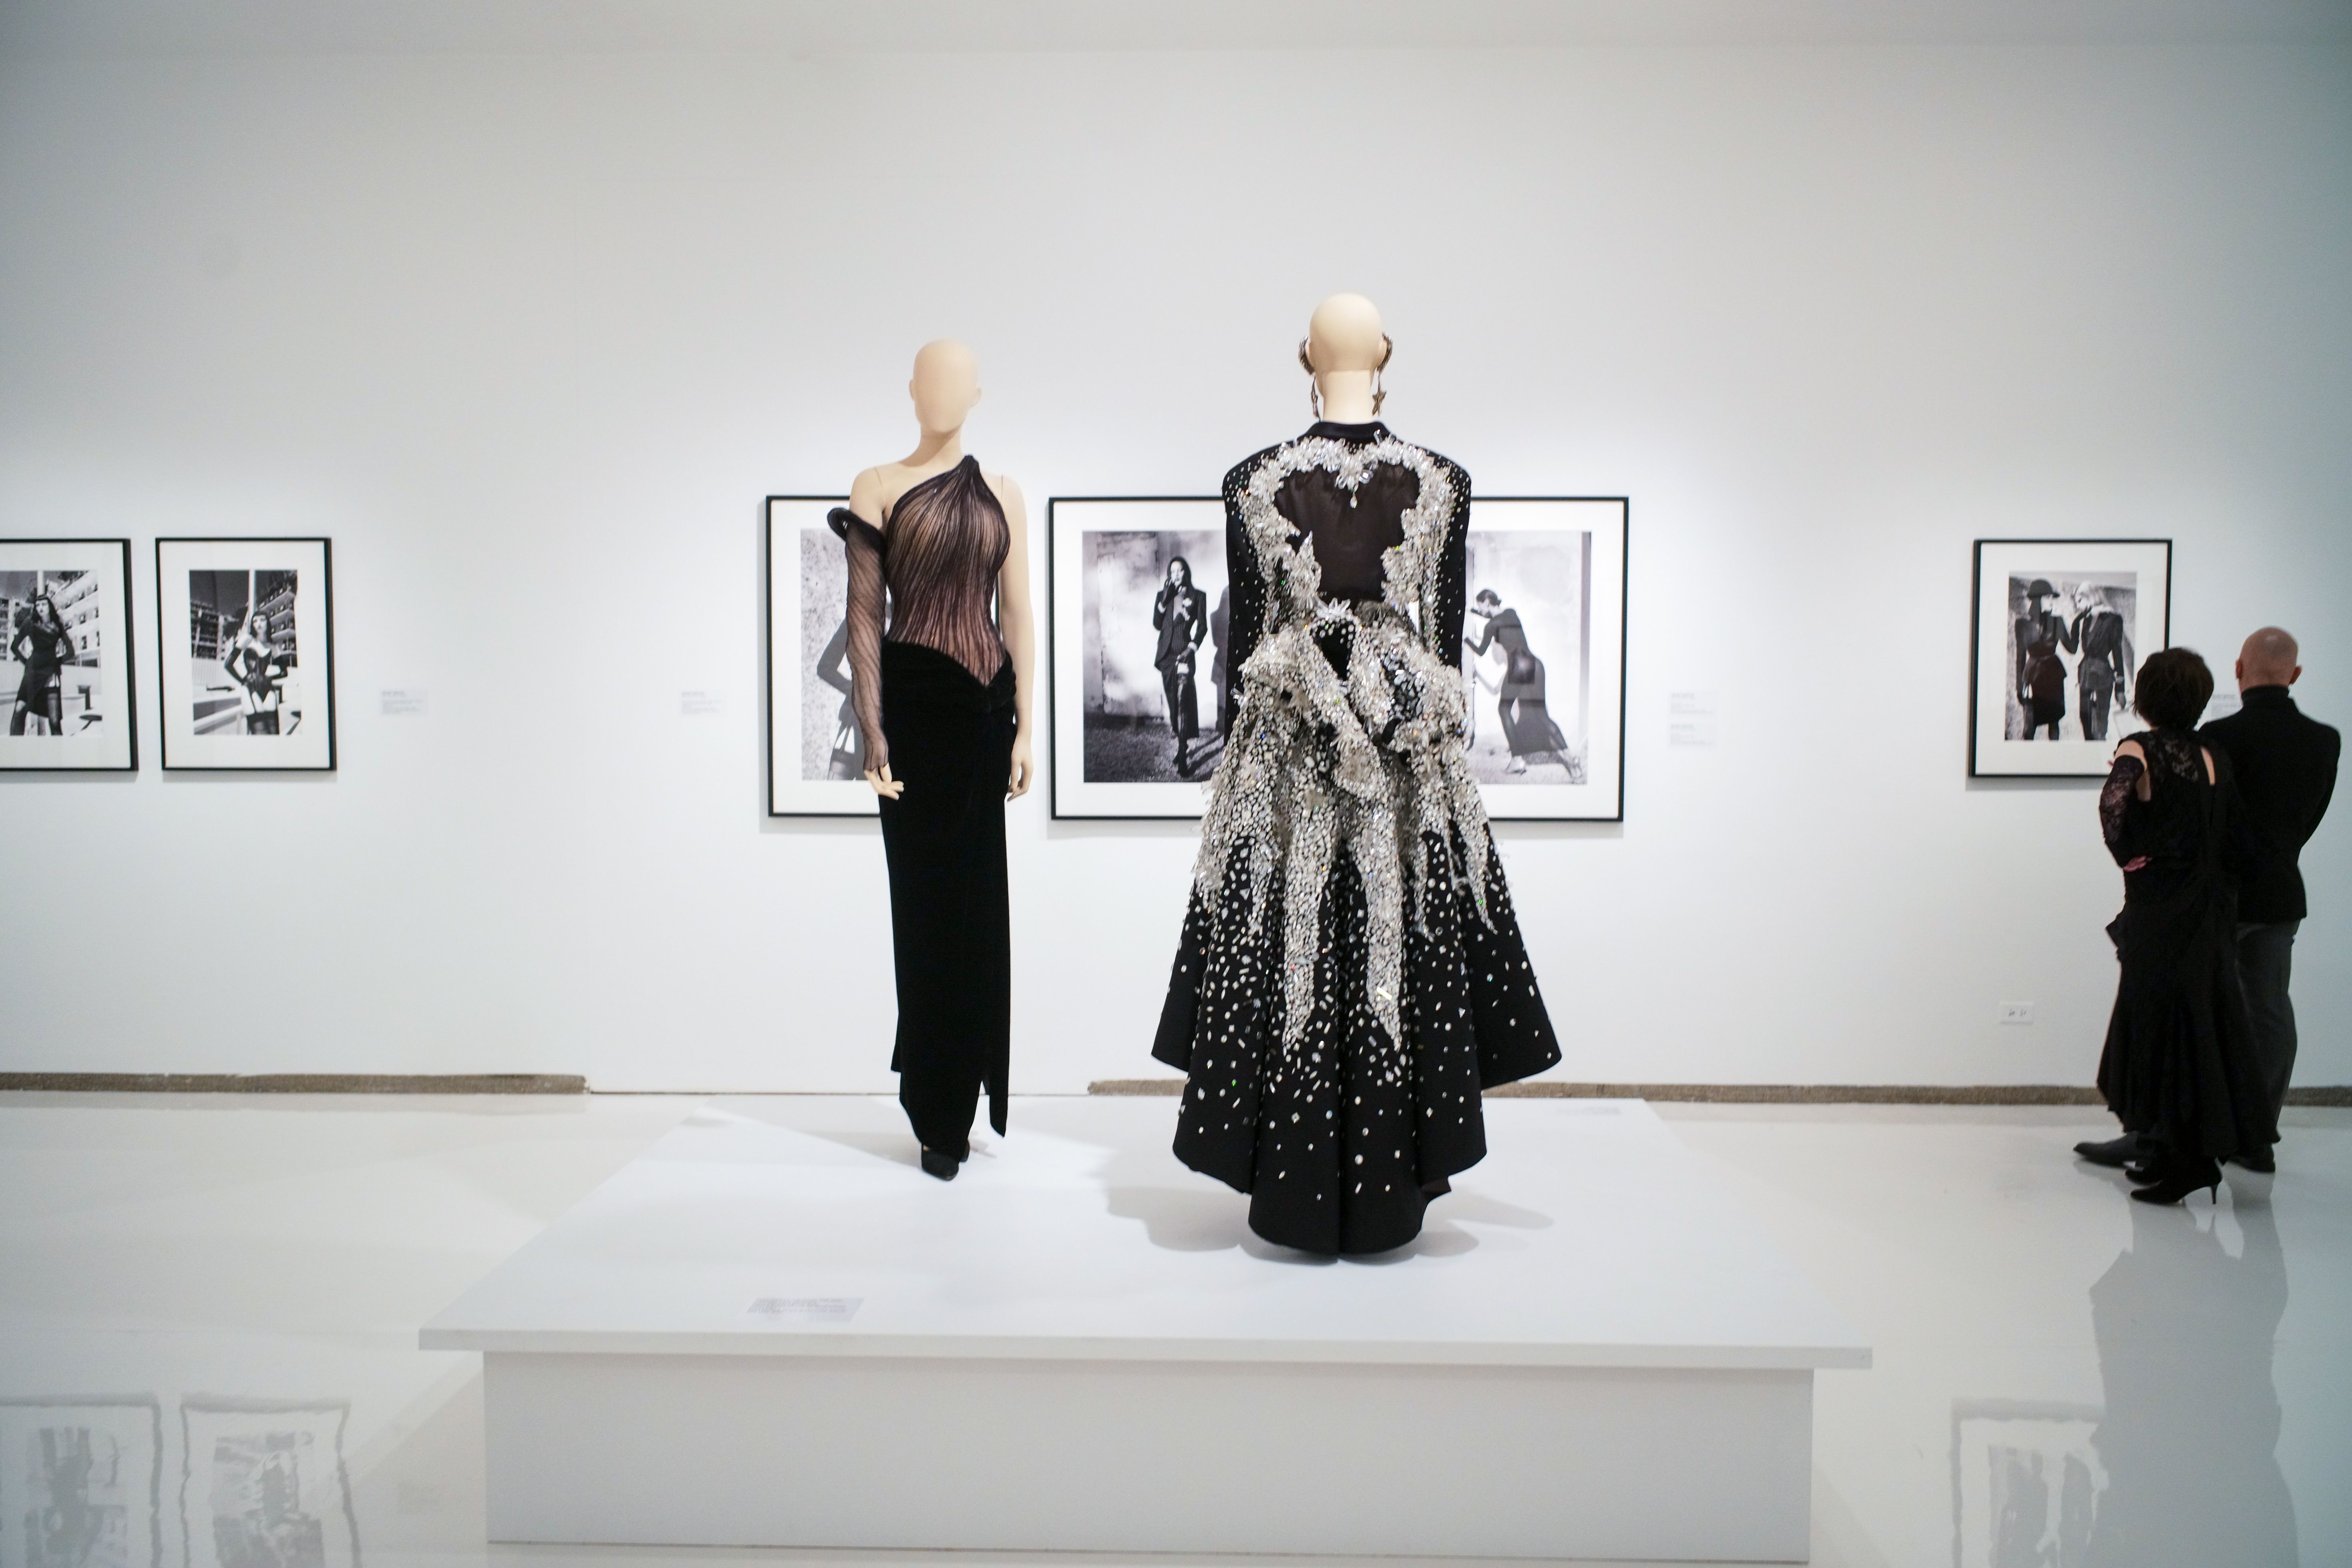 Thierry Mugler exhibition includes garments for dangerous seductresses